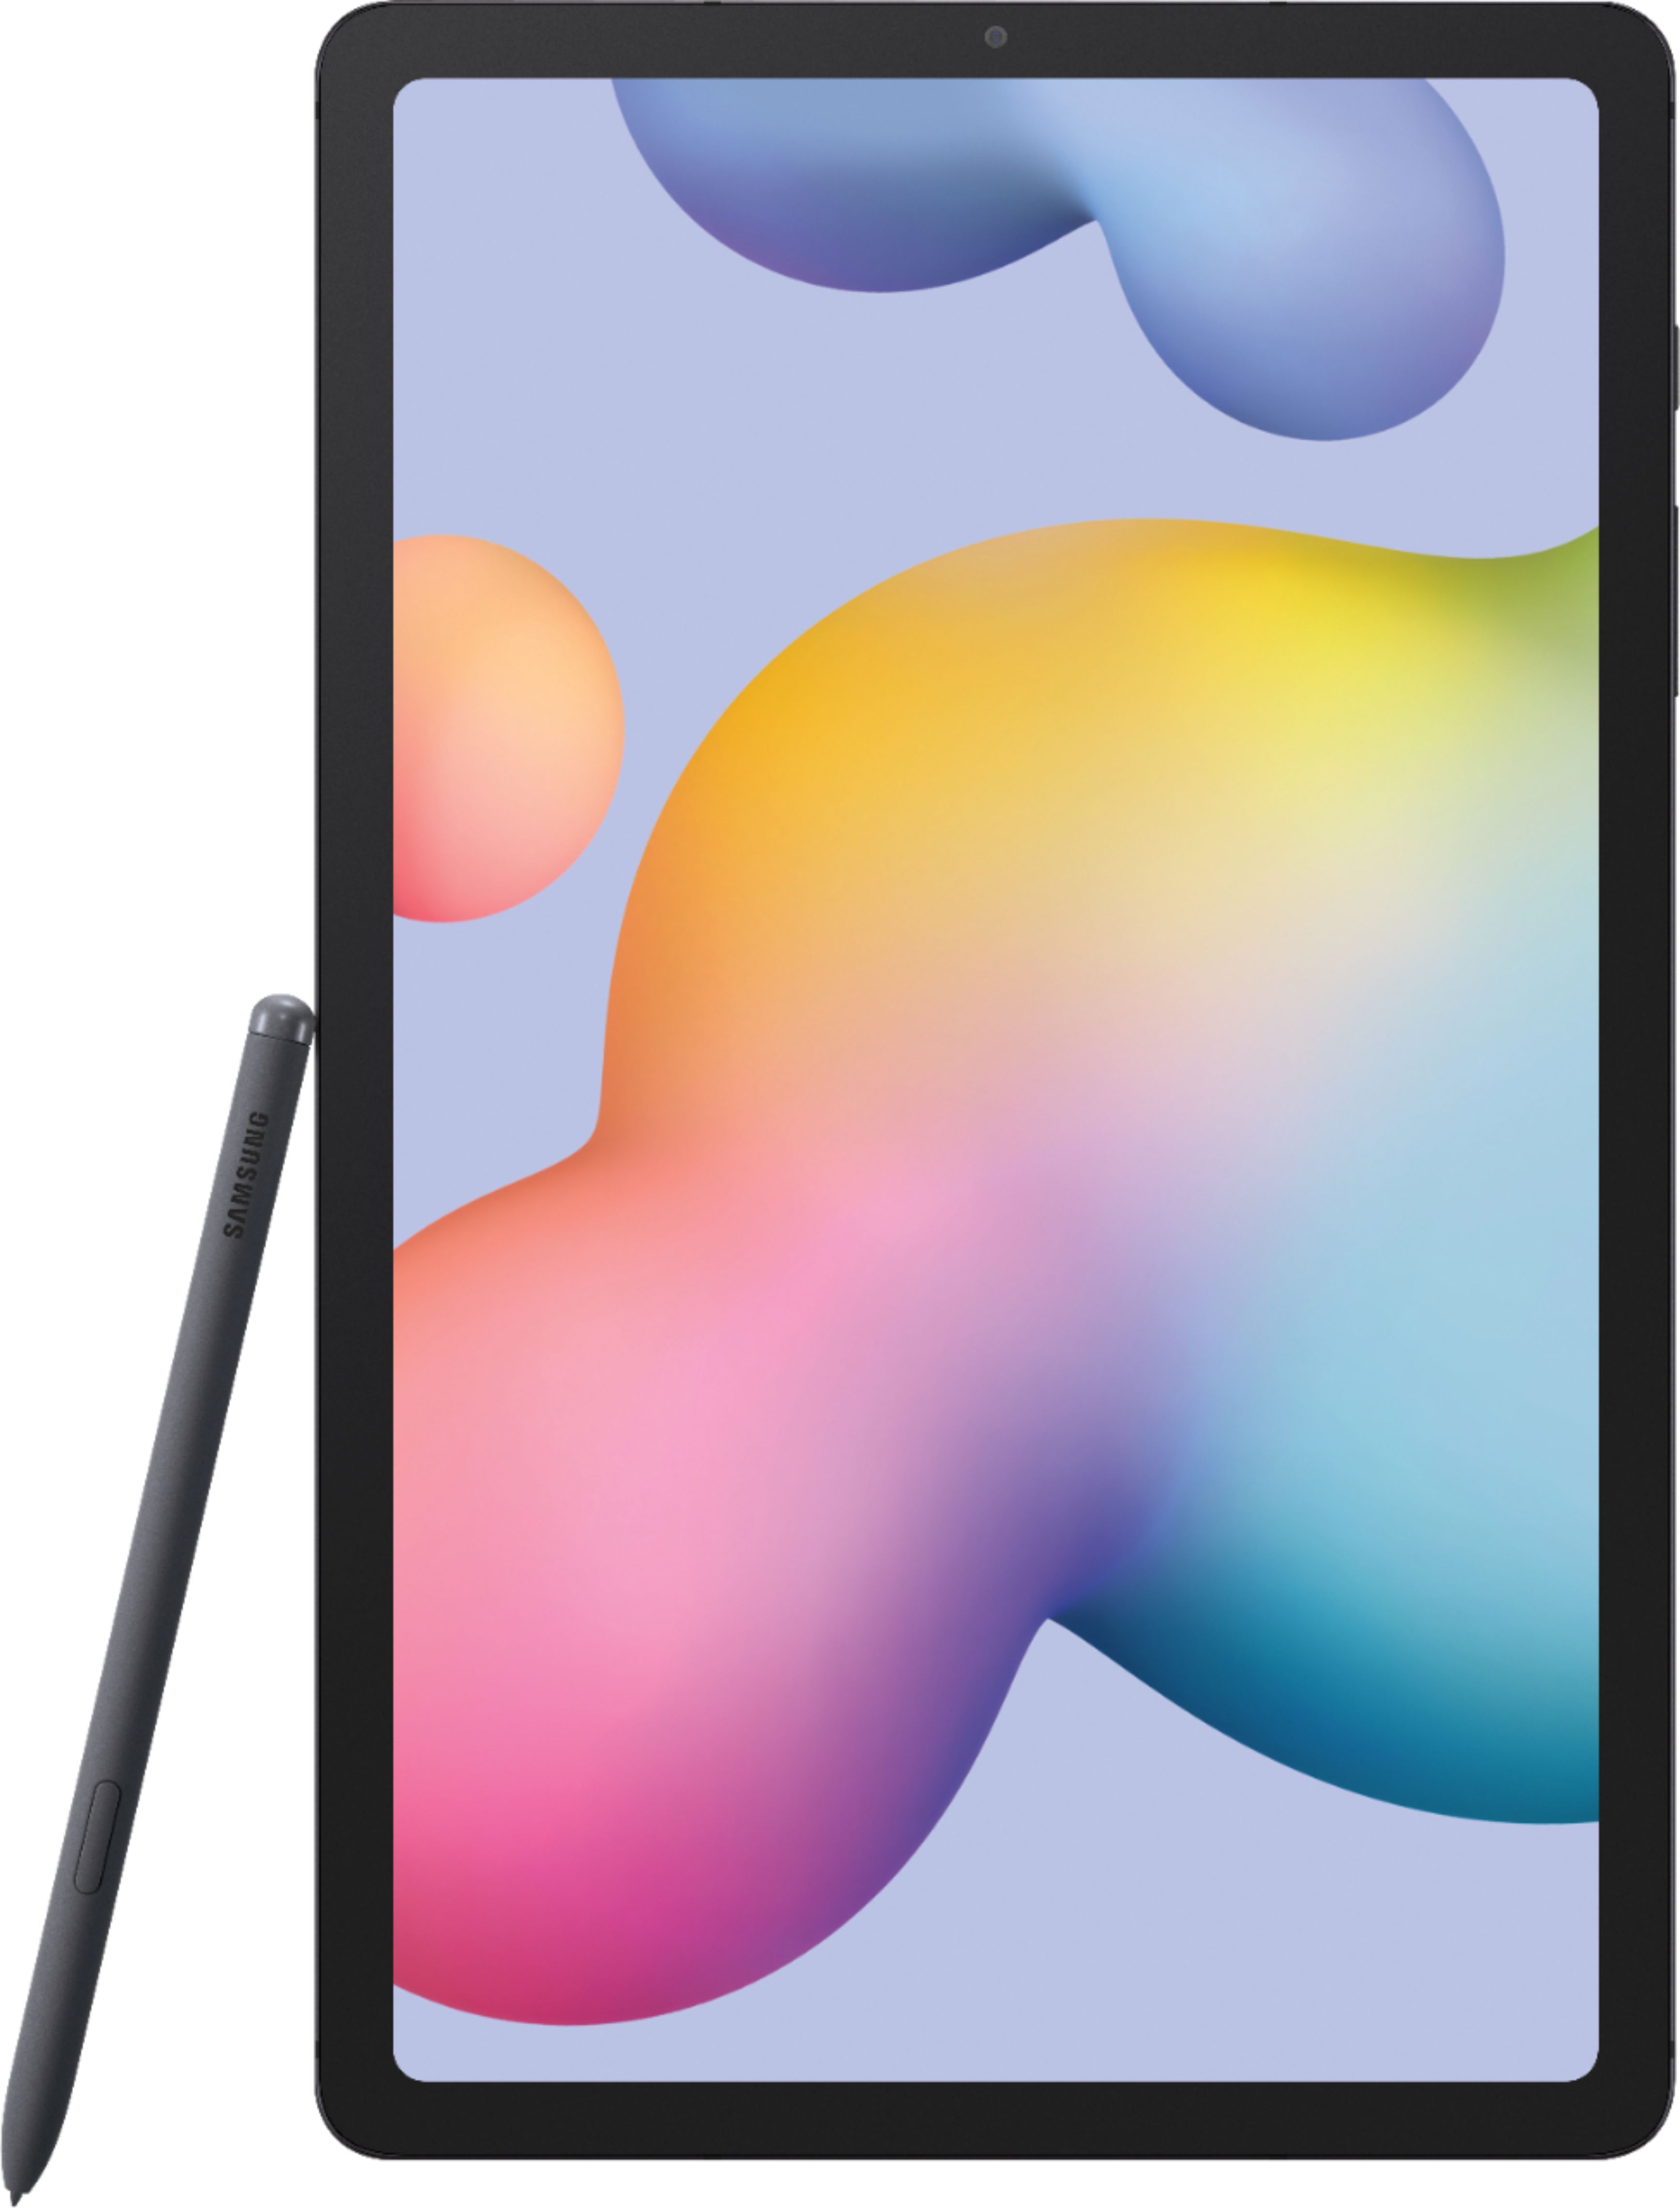 Samsung Galaxy Tab S6 Lite 10.4" 64GB Oxford Gray SM-P610NZAAXAR - Best Buy | Best Buy U.S.